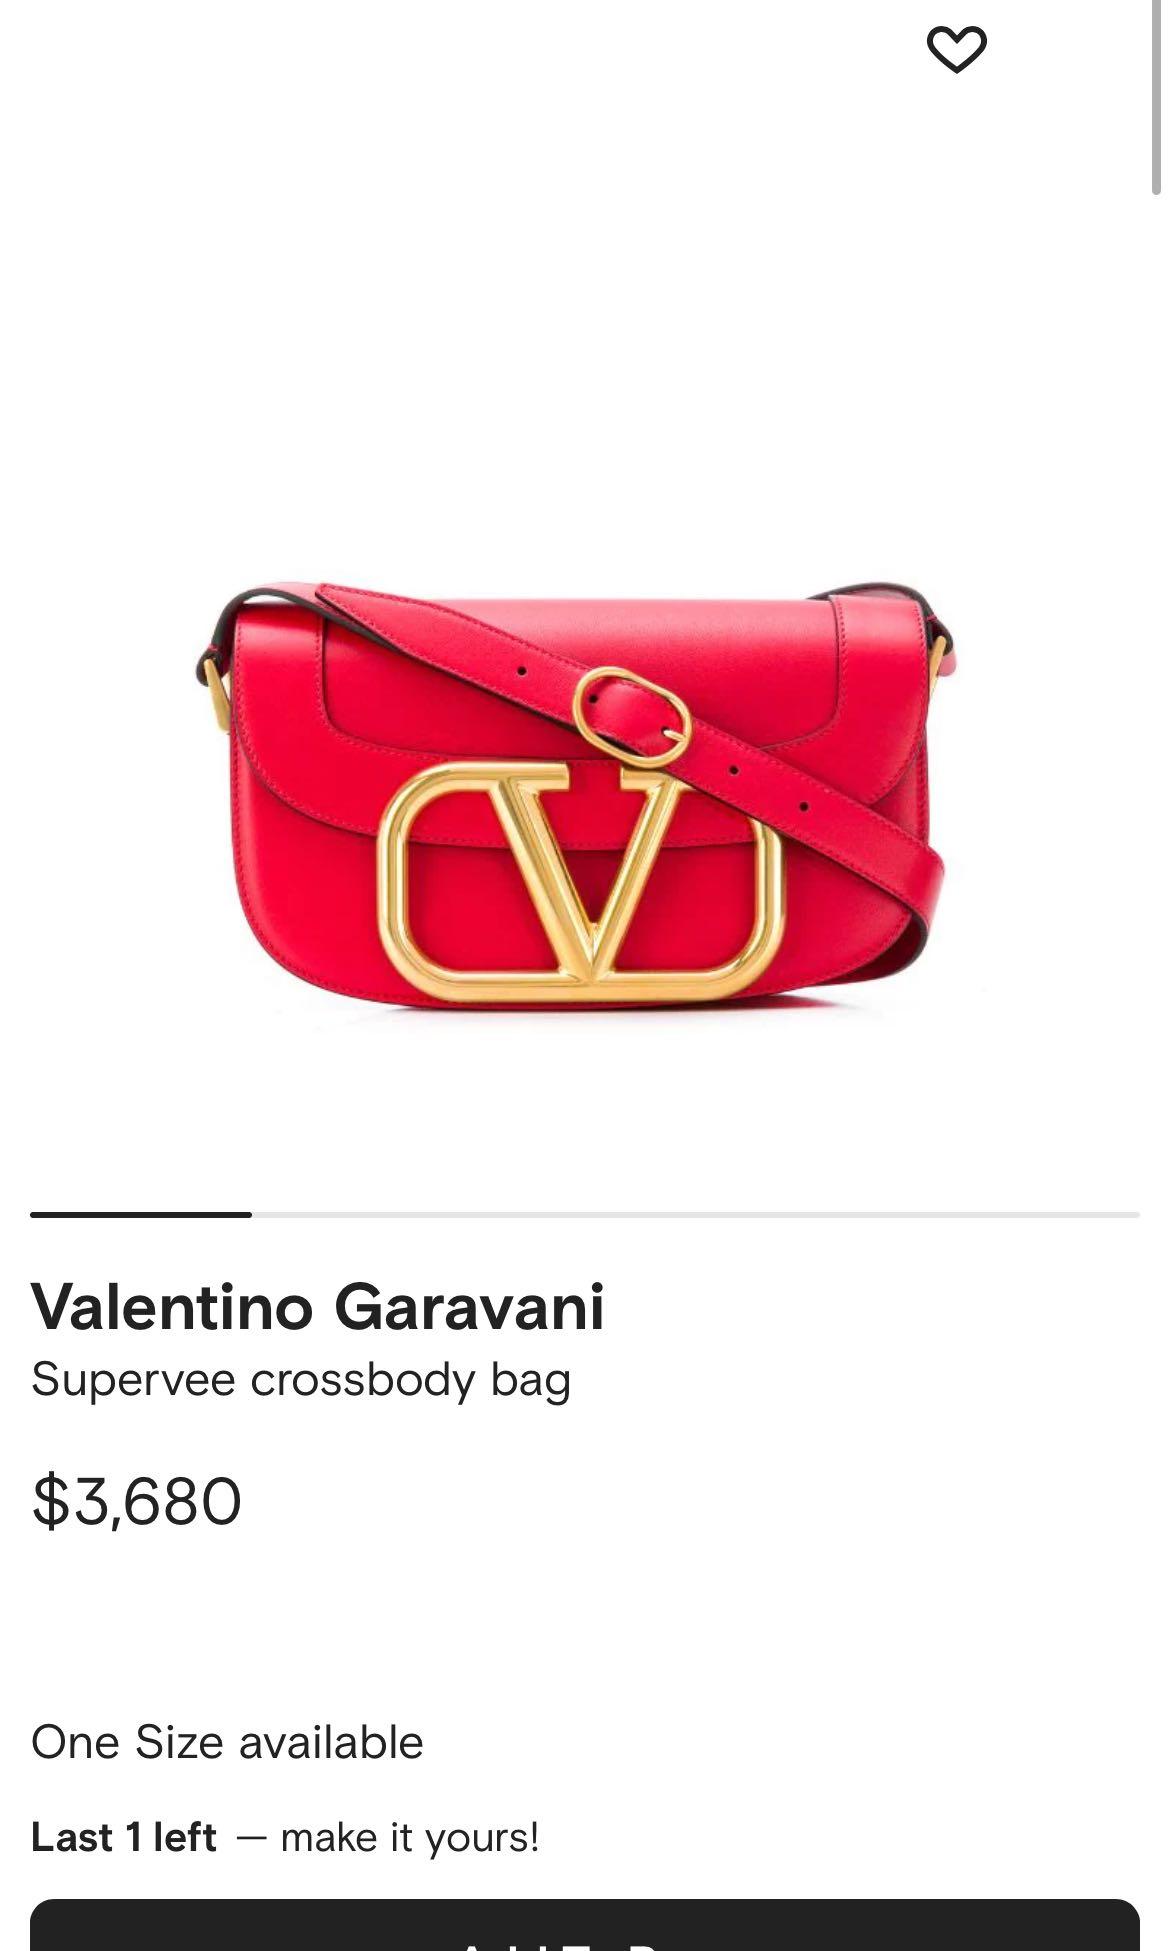 Valentino Garavani Black Crossbody Supervee Bag Valentino Garavani